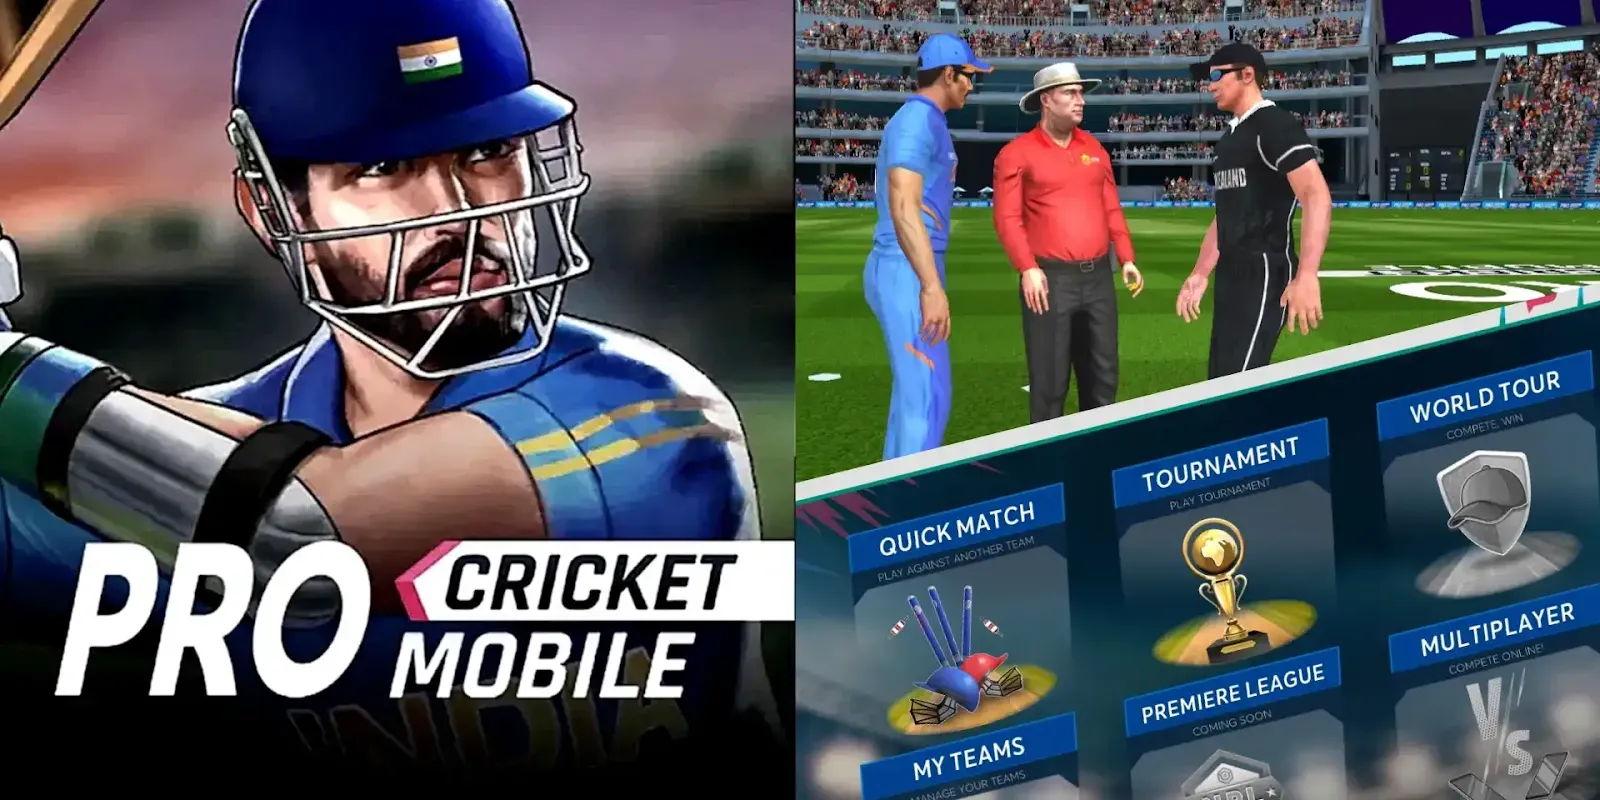 Download ICC Cricket Mobile APK